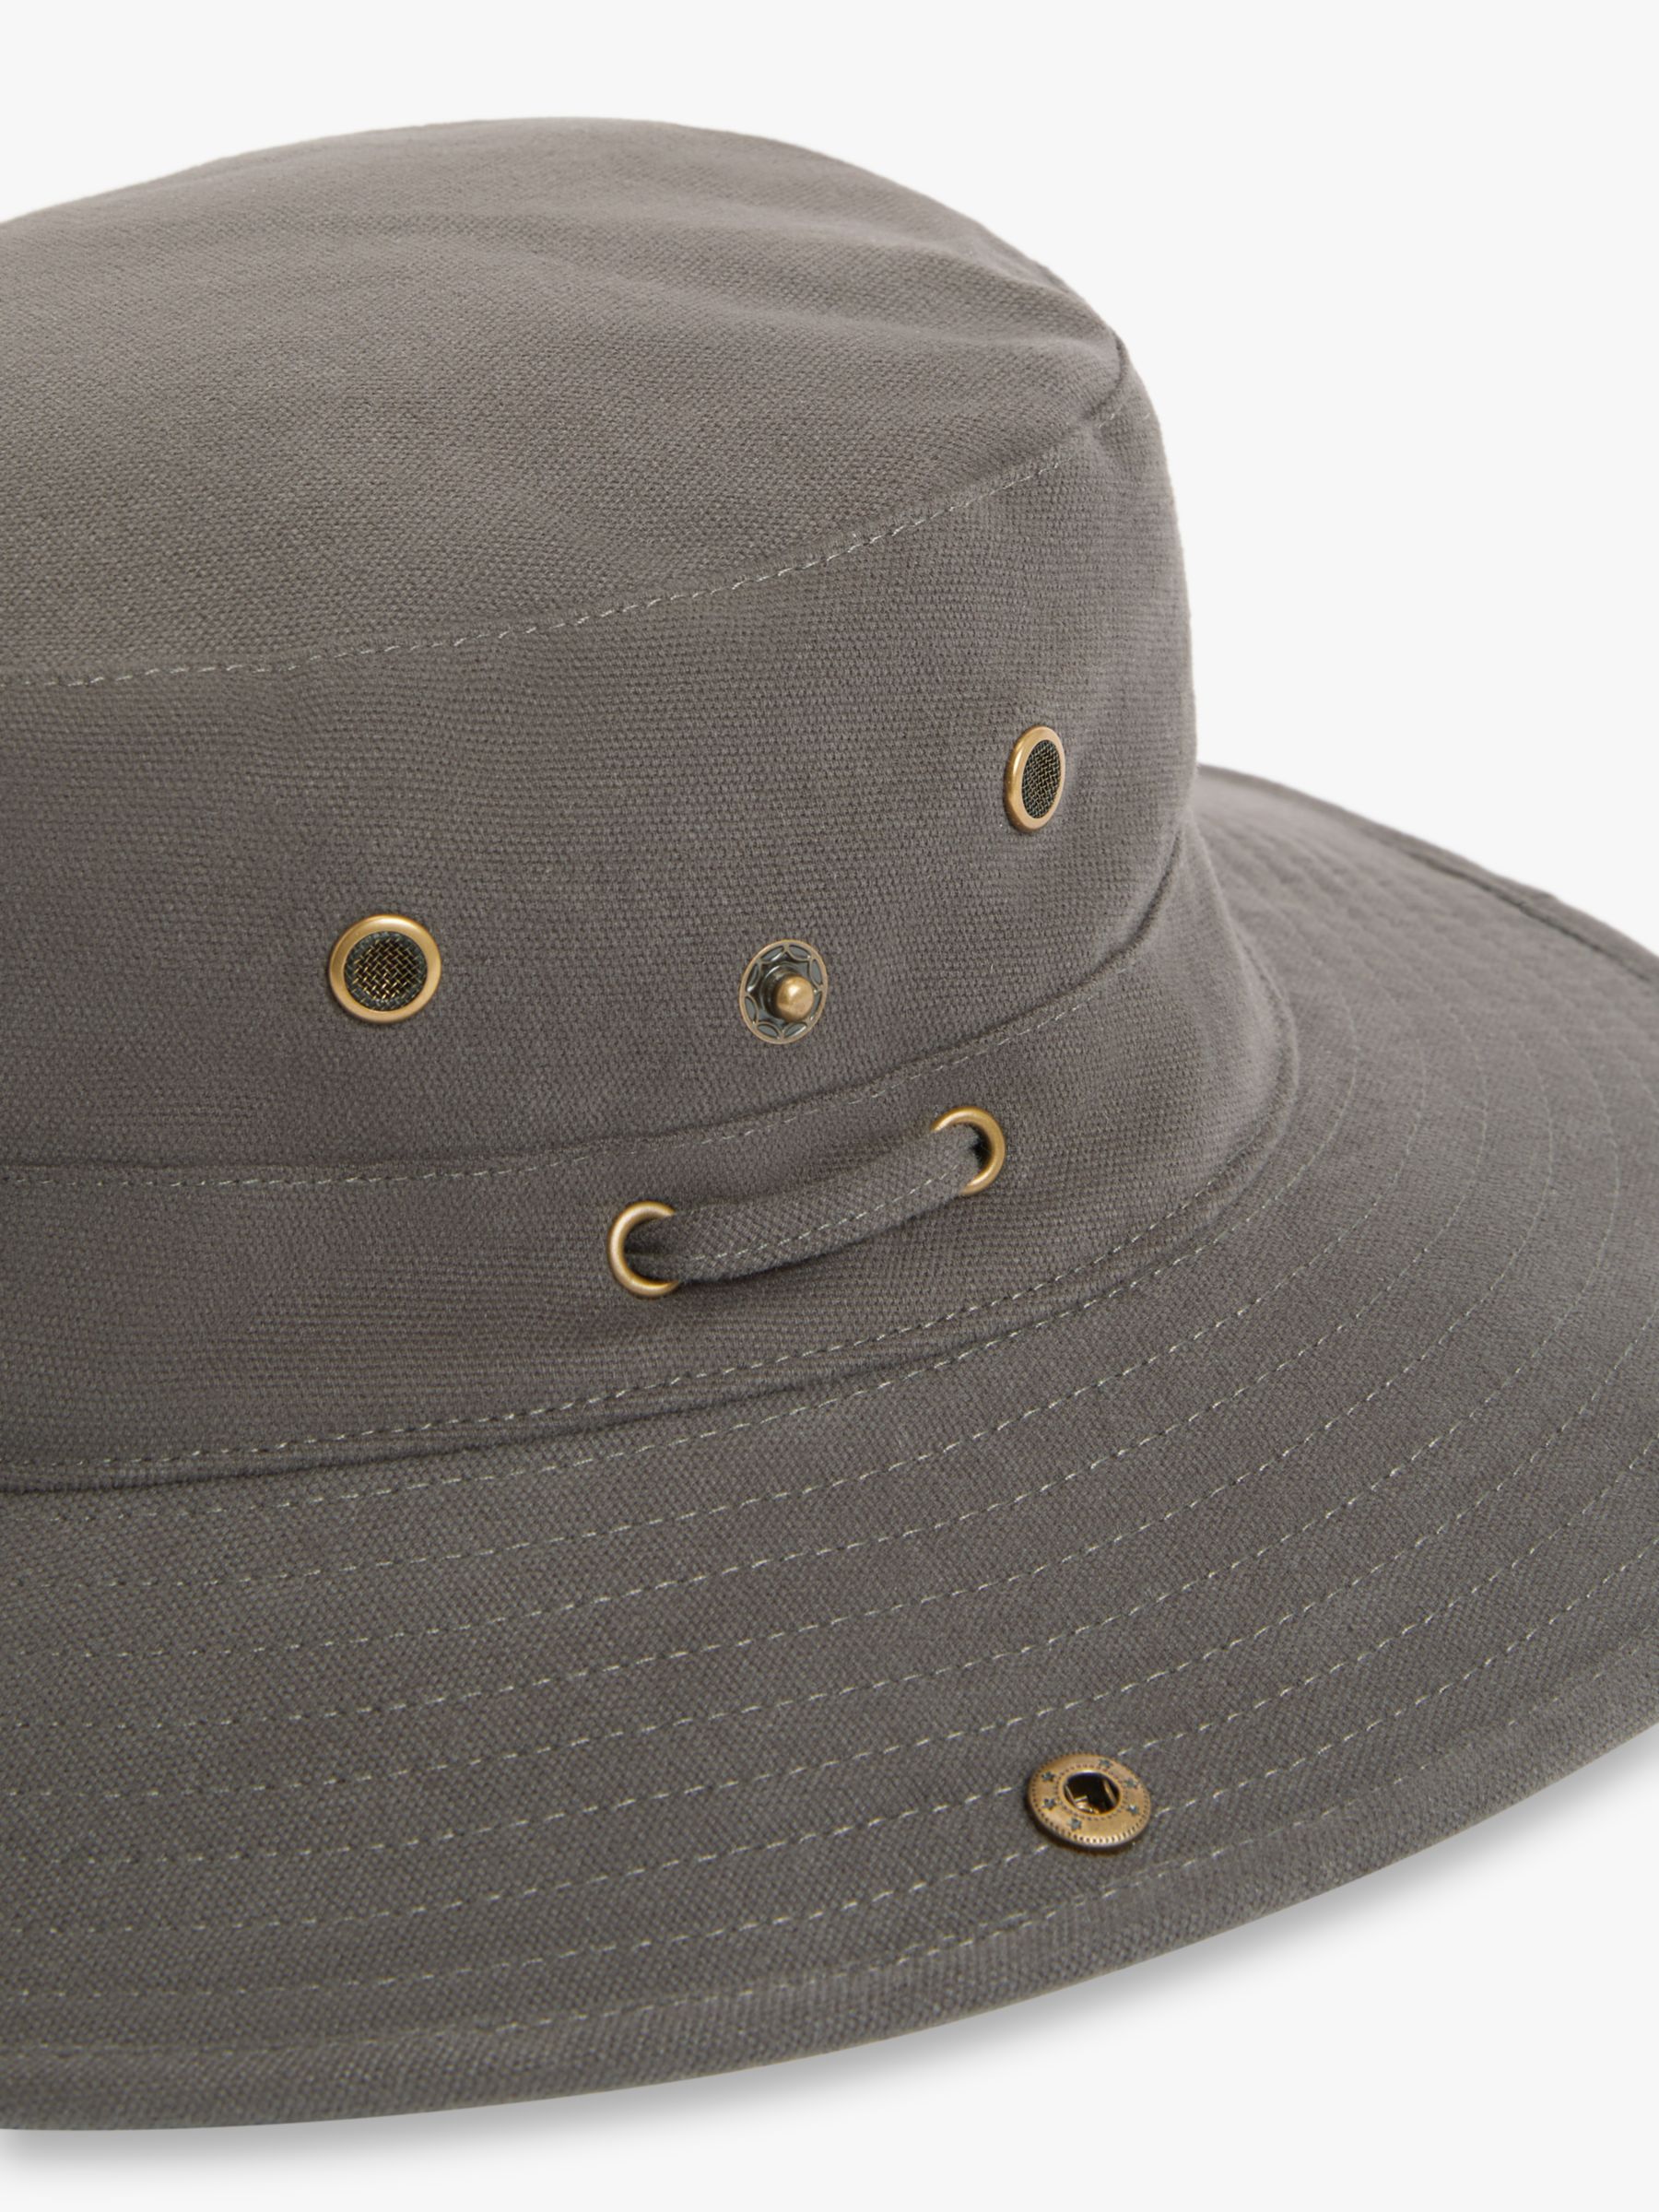 John Lewis Cotton Safari Hat, Charcoal at John Lewis & Partners